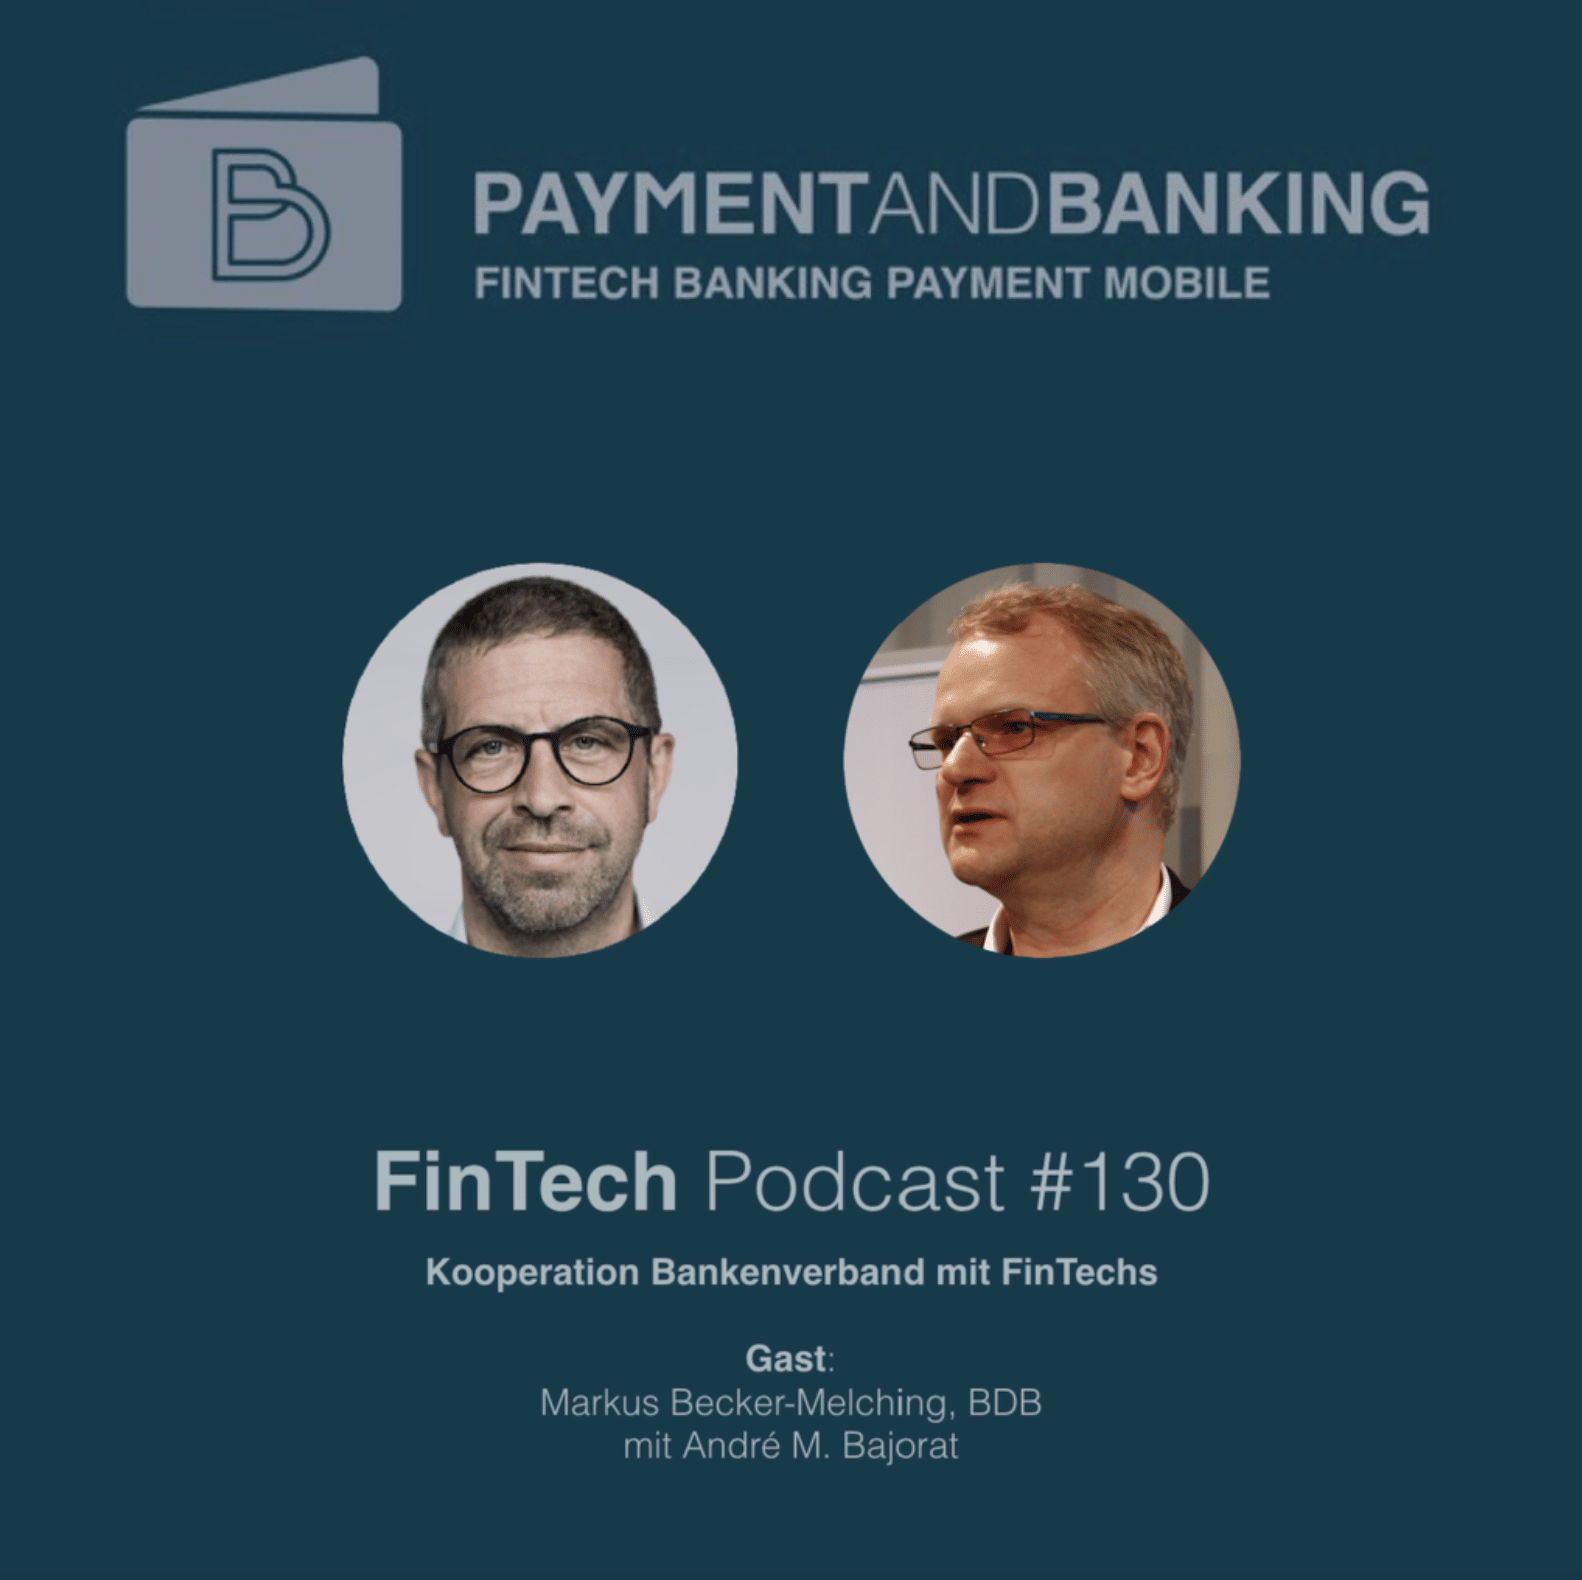 Fintech Podcast #130 - Kooperation Bankenverband und FinTechs